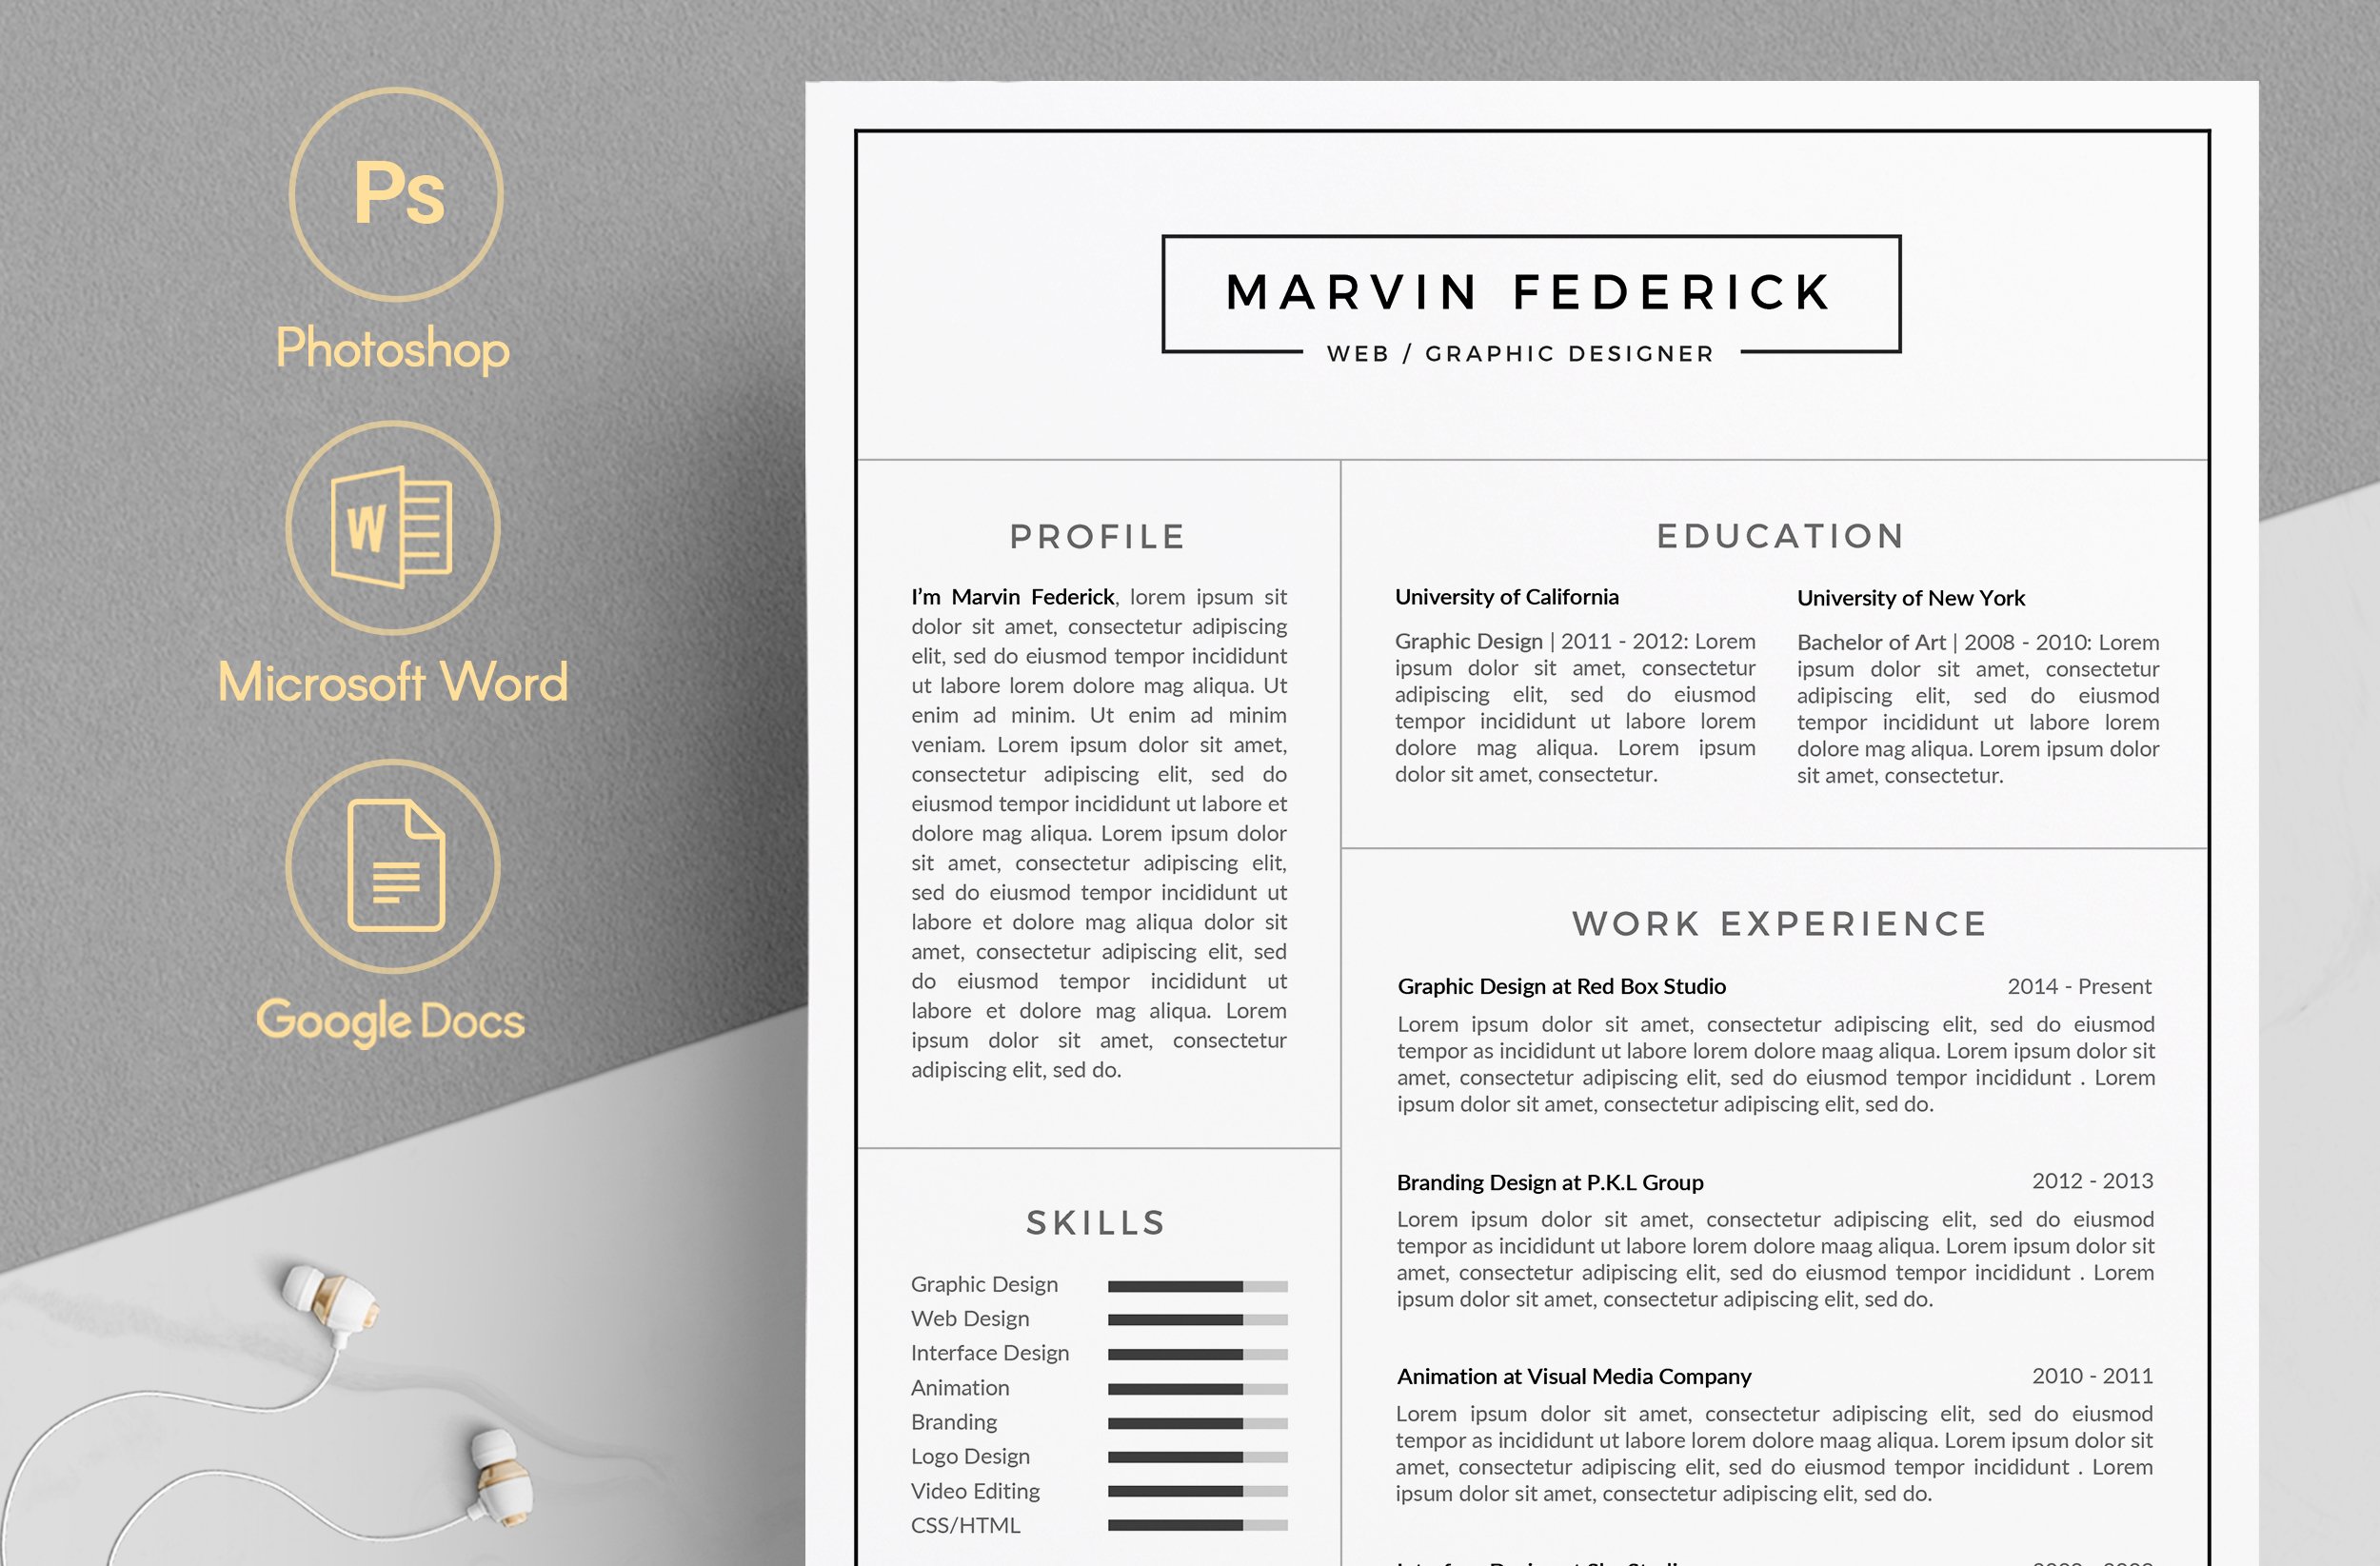 Resume/CV - MF cover image.